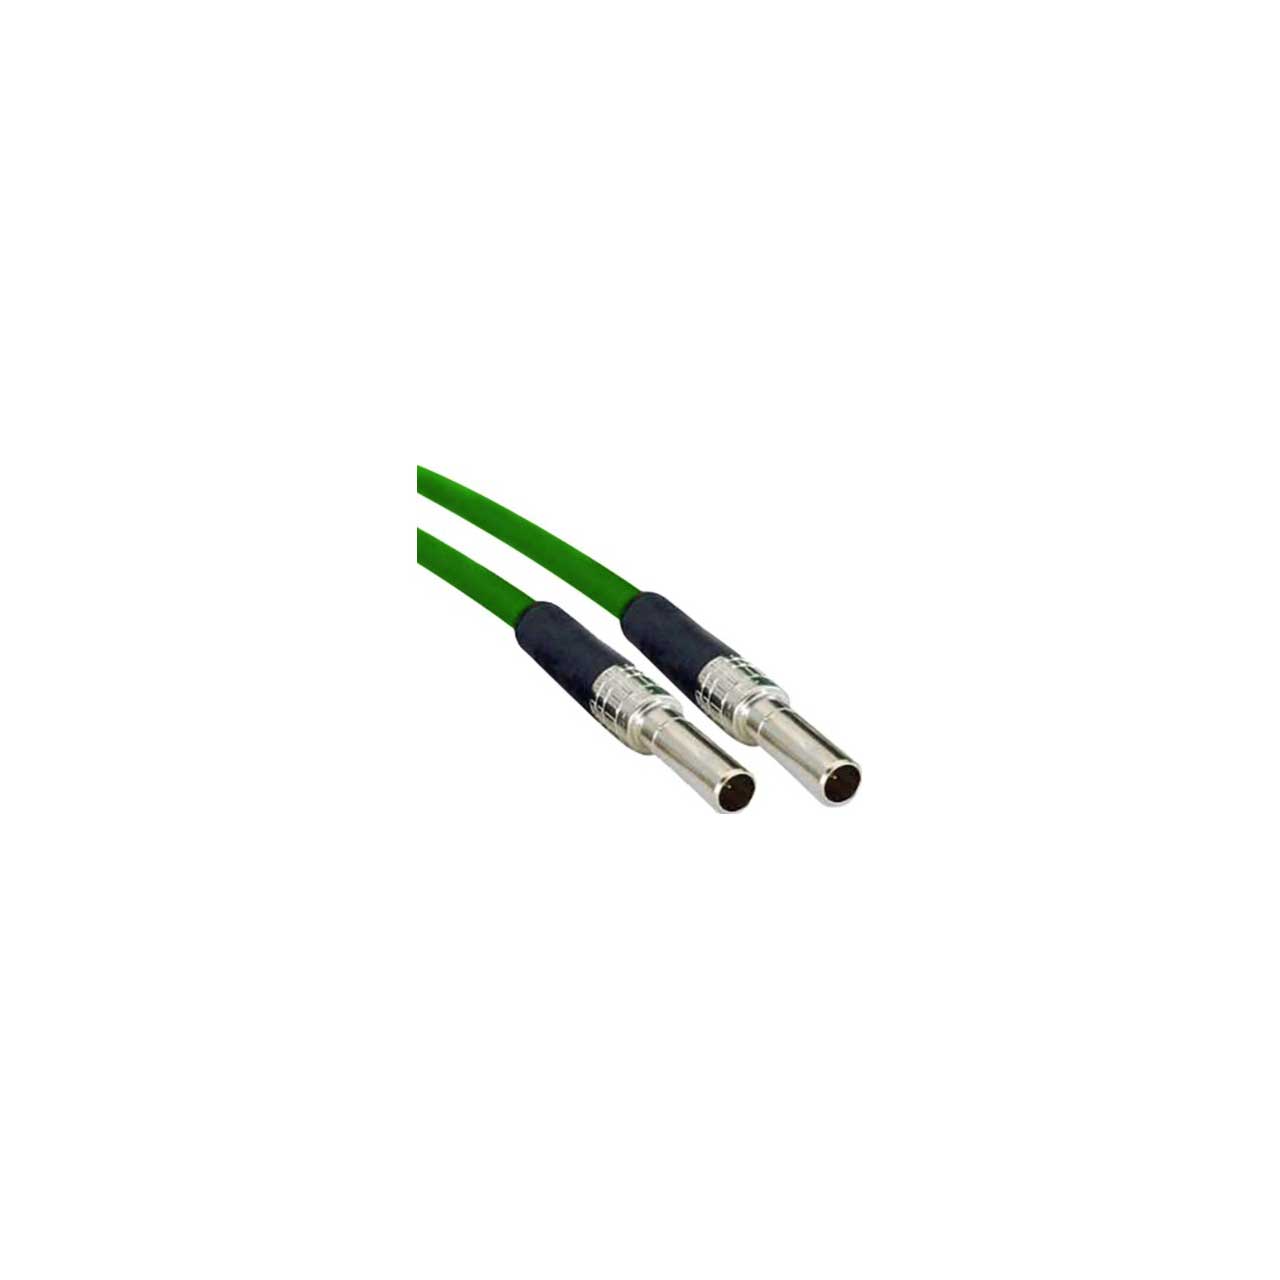 AVP MPC-1-Green Midsize 3G HD-SDI Video Patchcord - Green - 1 Foot MPC-1-GREEN